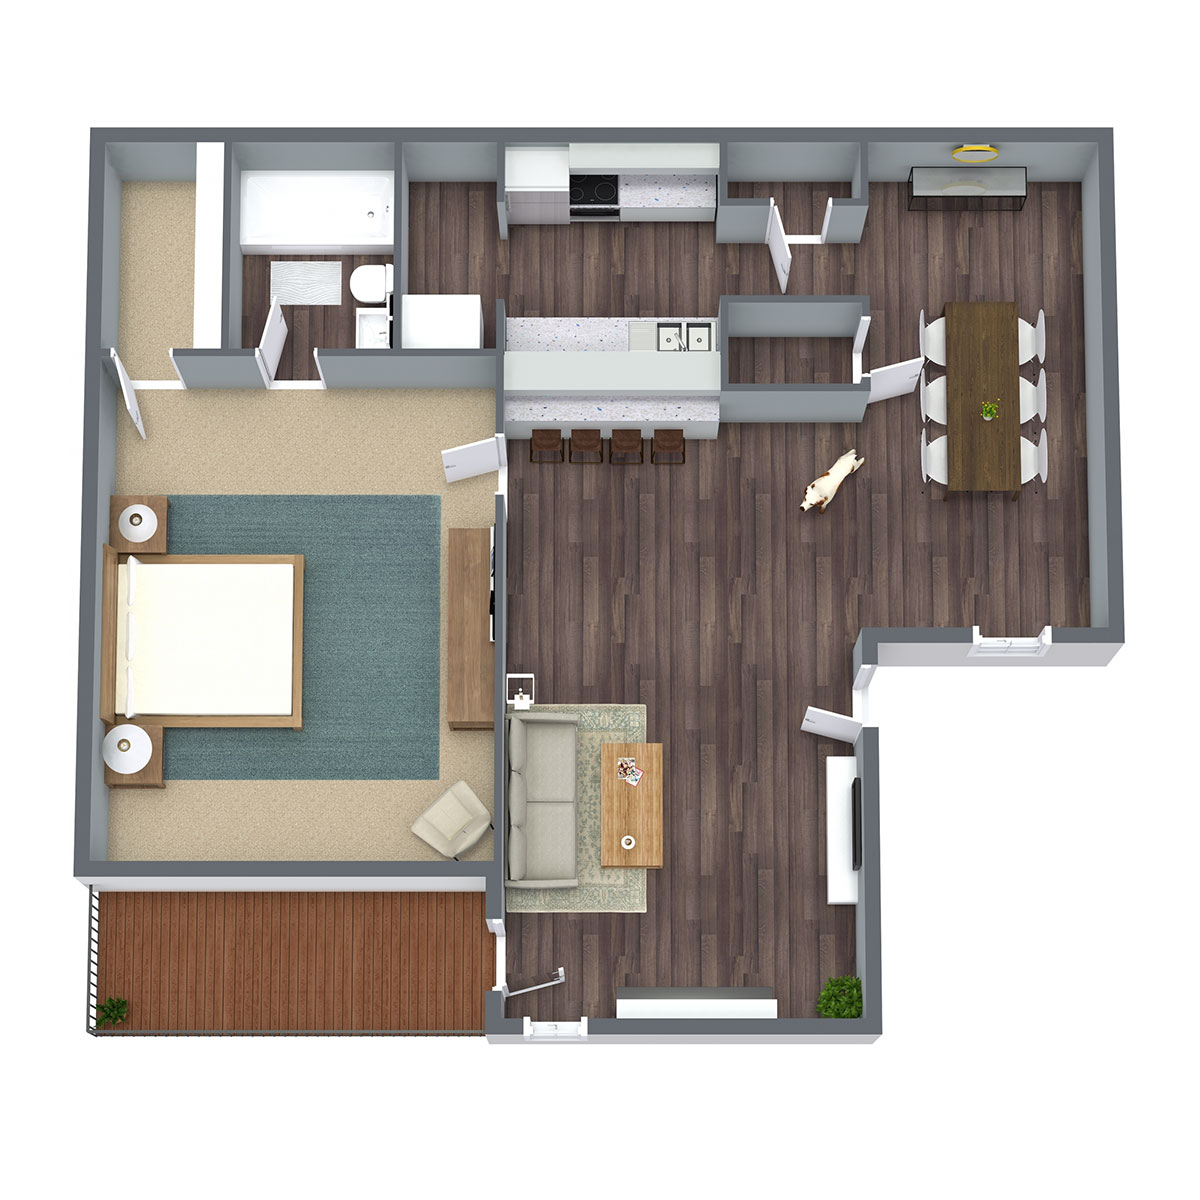 Rock Island Apartments Floorplan 2